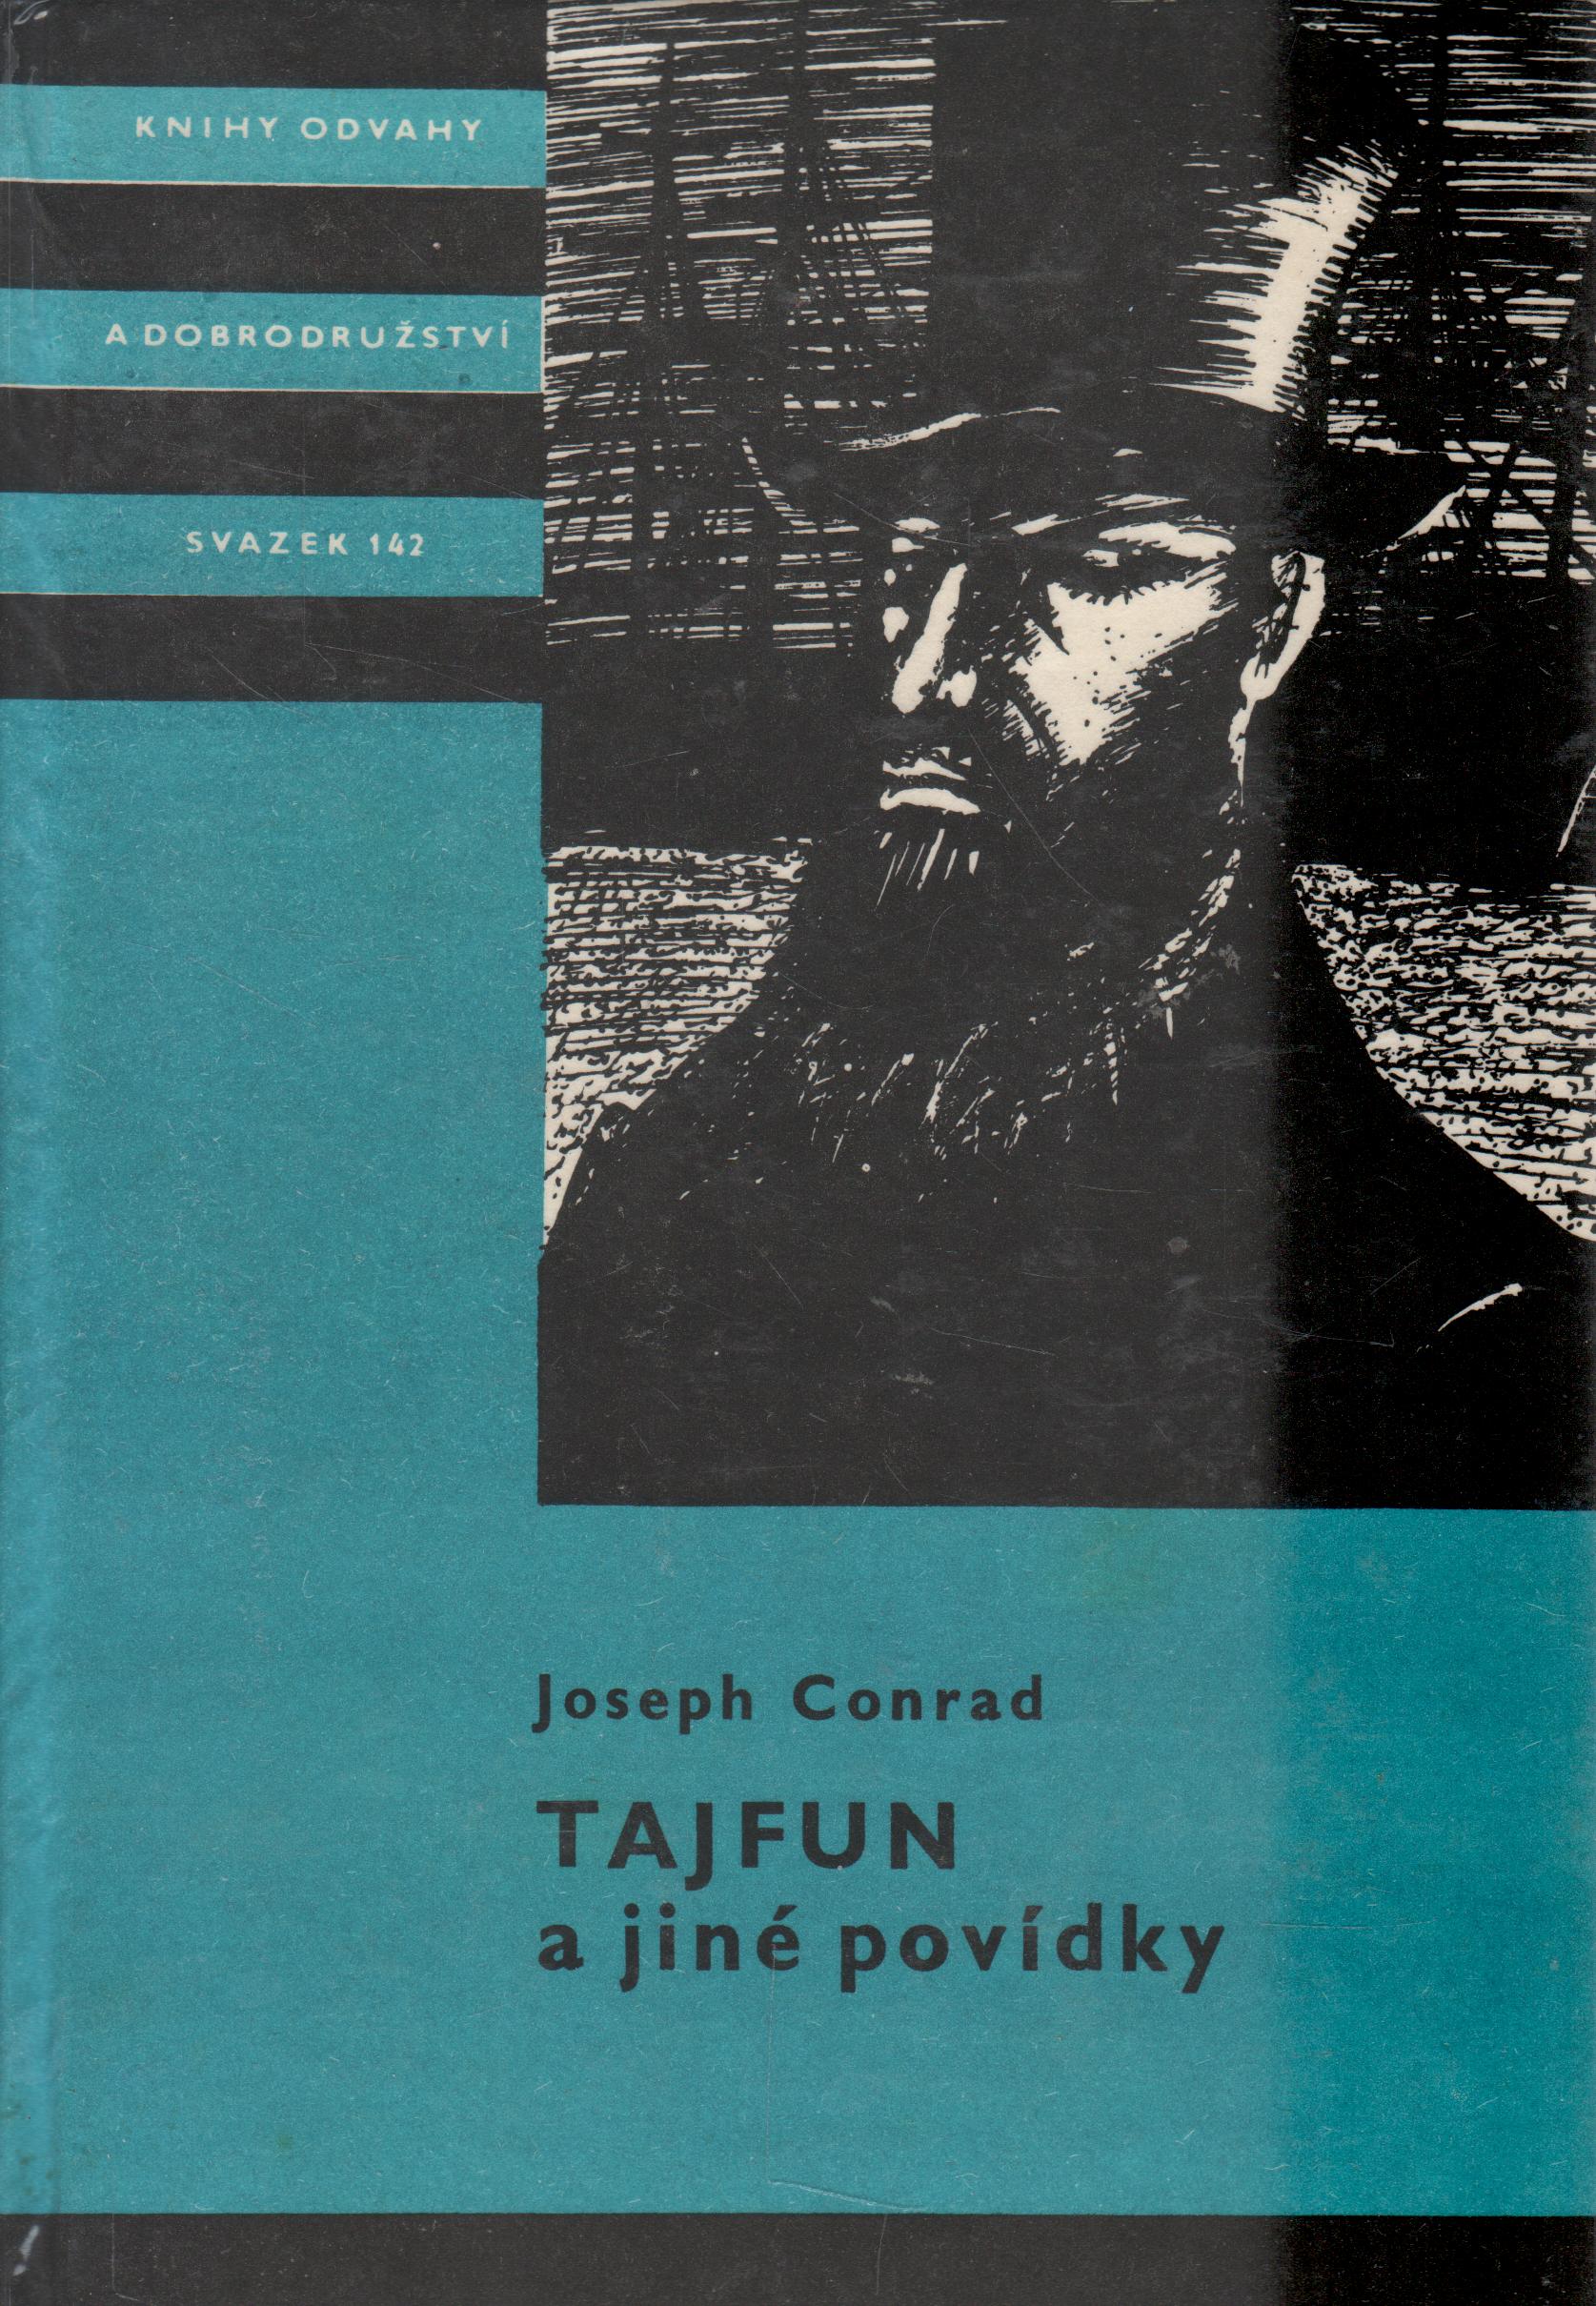 KOD sv. Tajfun a jiné povídky / Joseph Conrad, 1976